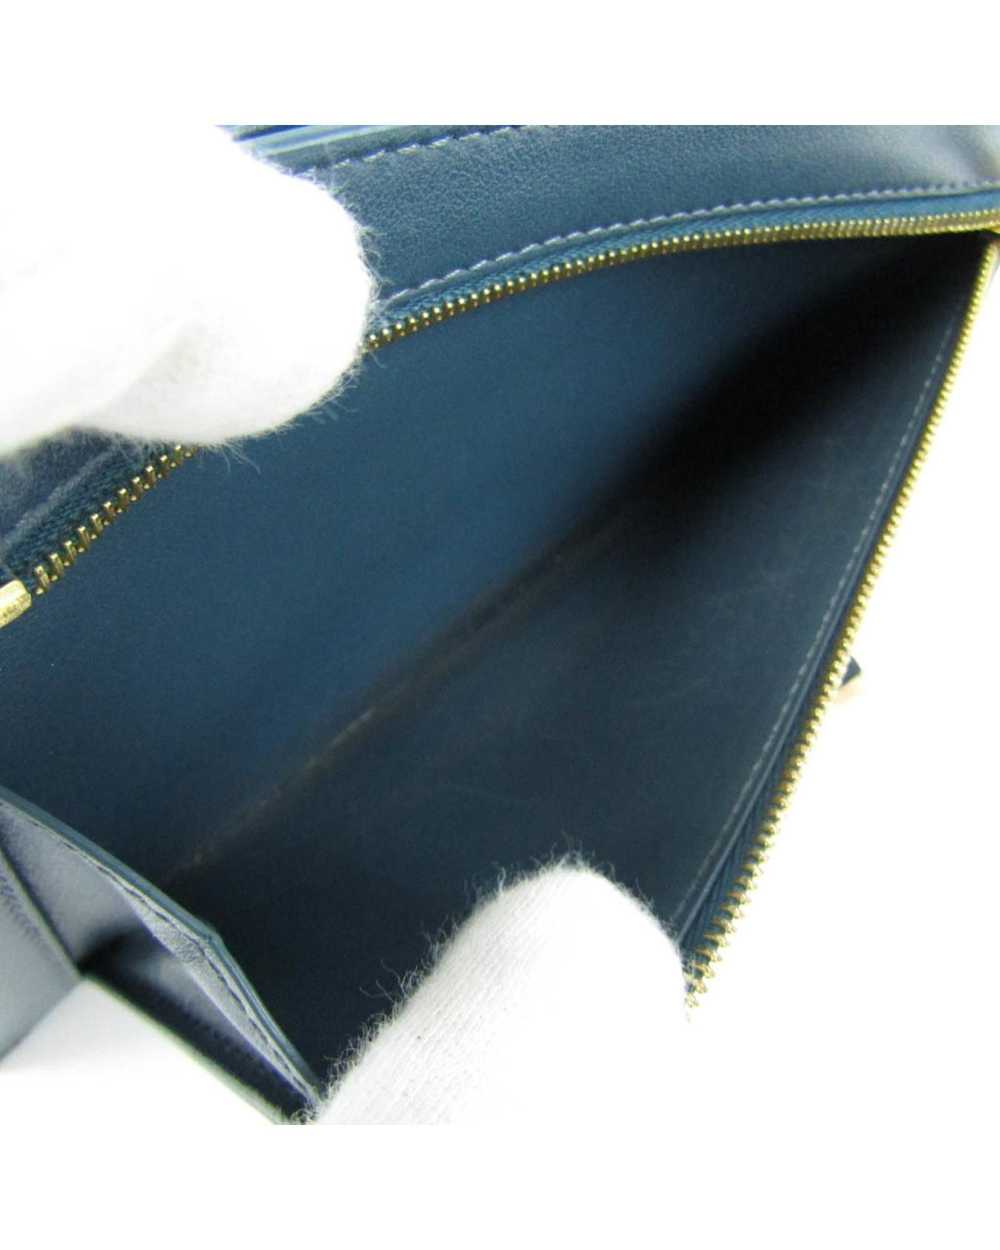 Celine Navy Leather Wallet - Practical and Elegant - image 4